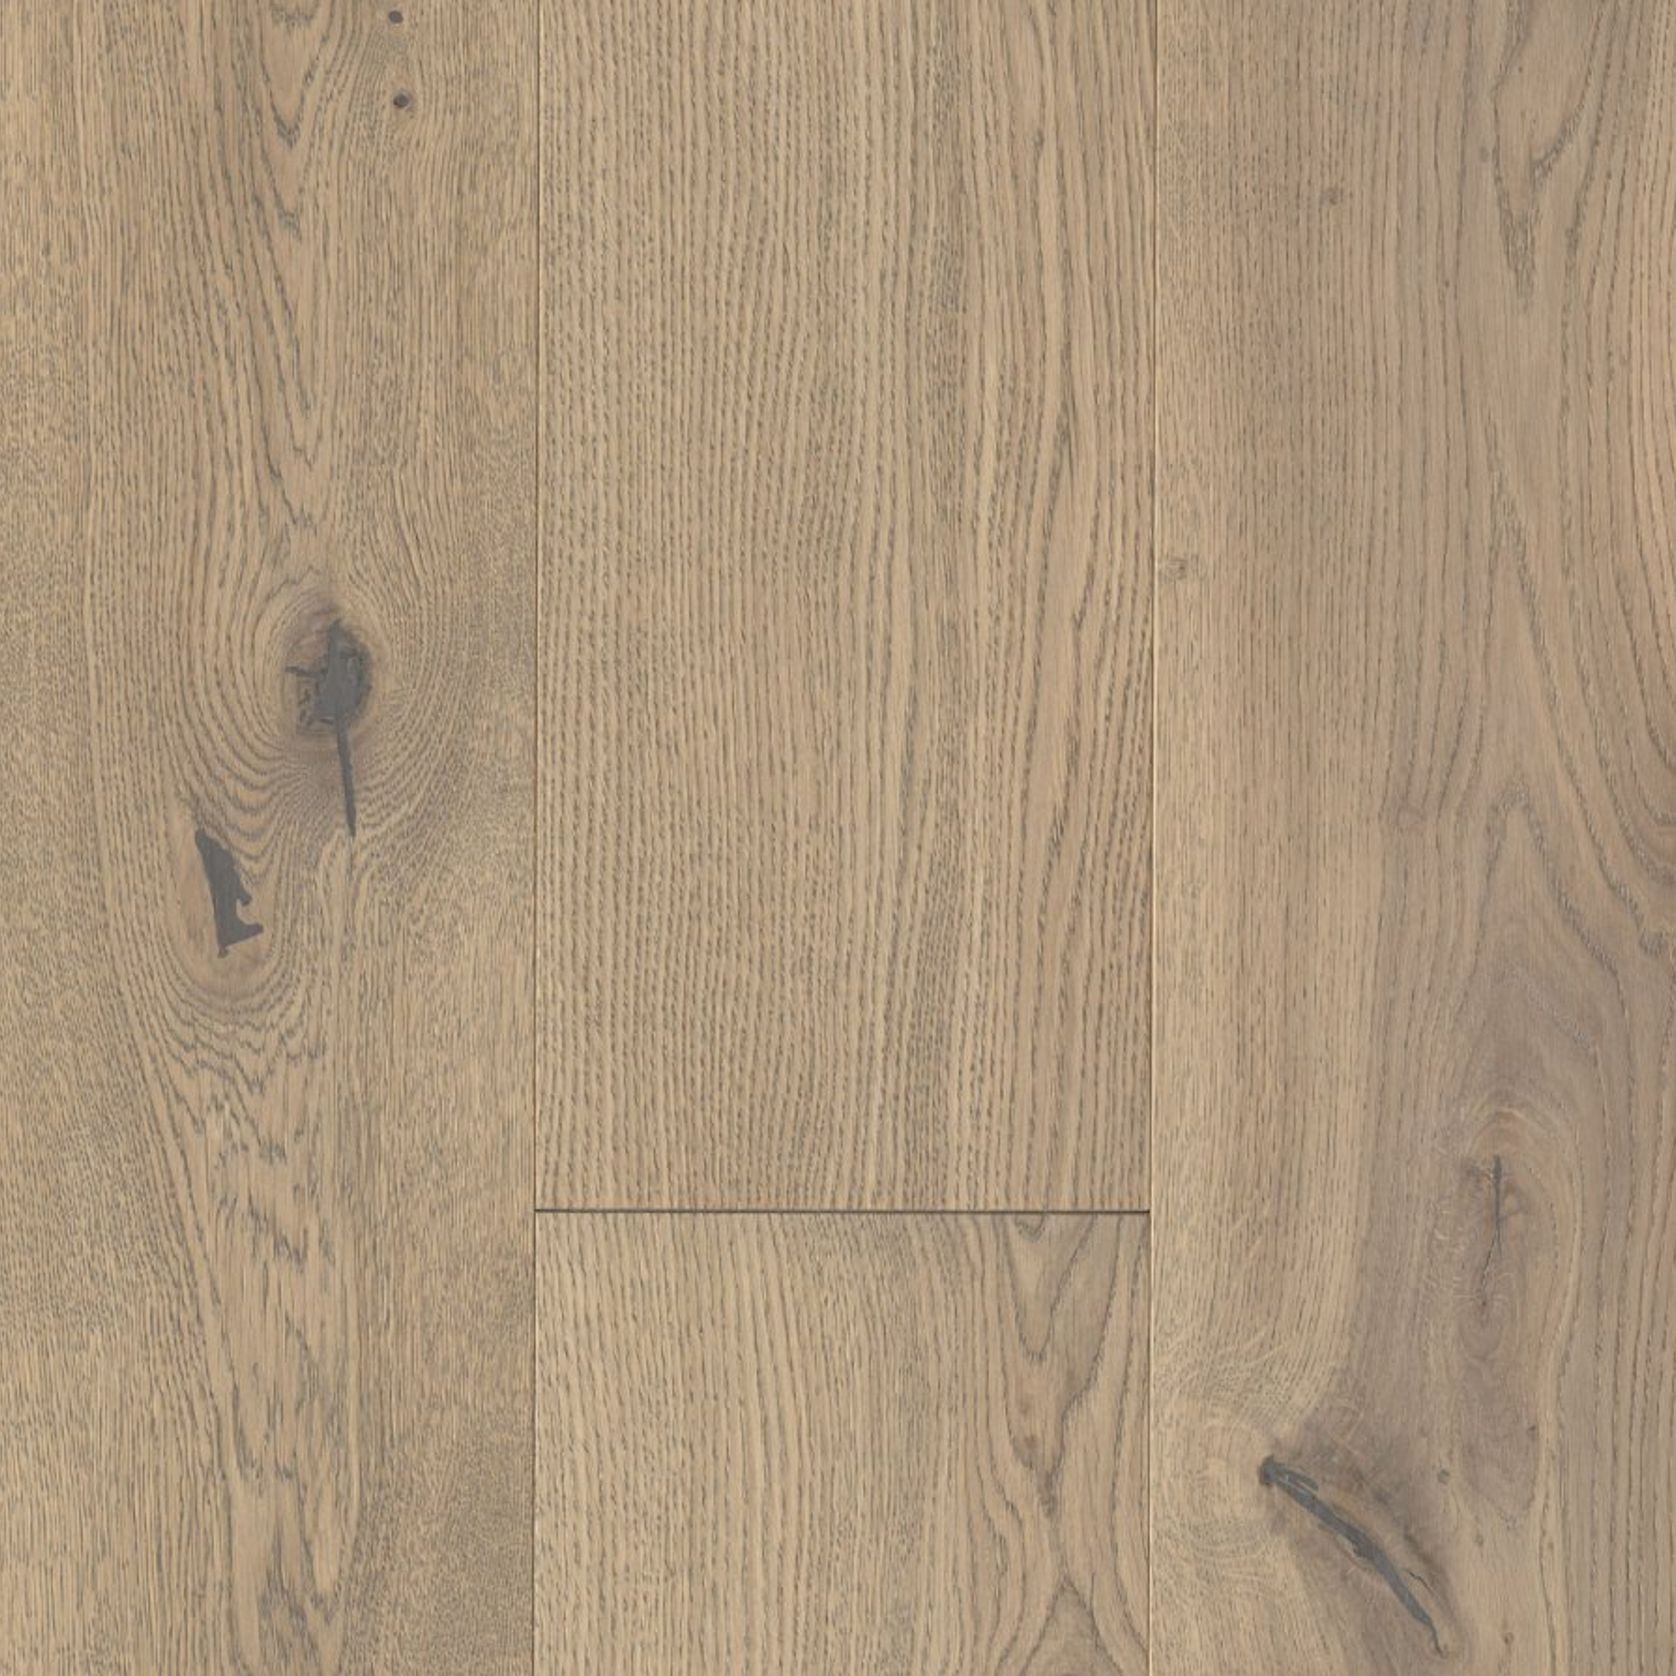 Moda Altro Verona Feature Plank Timber Flooring gallery detail image